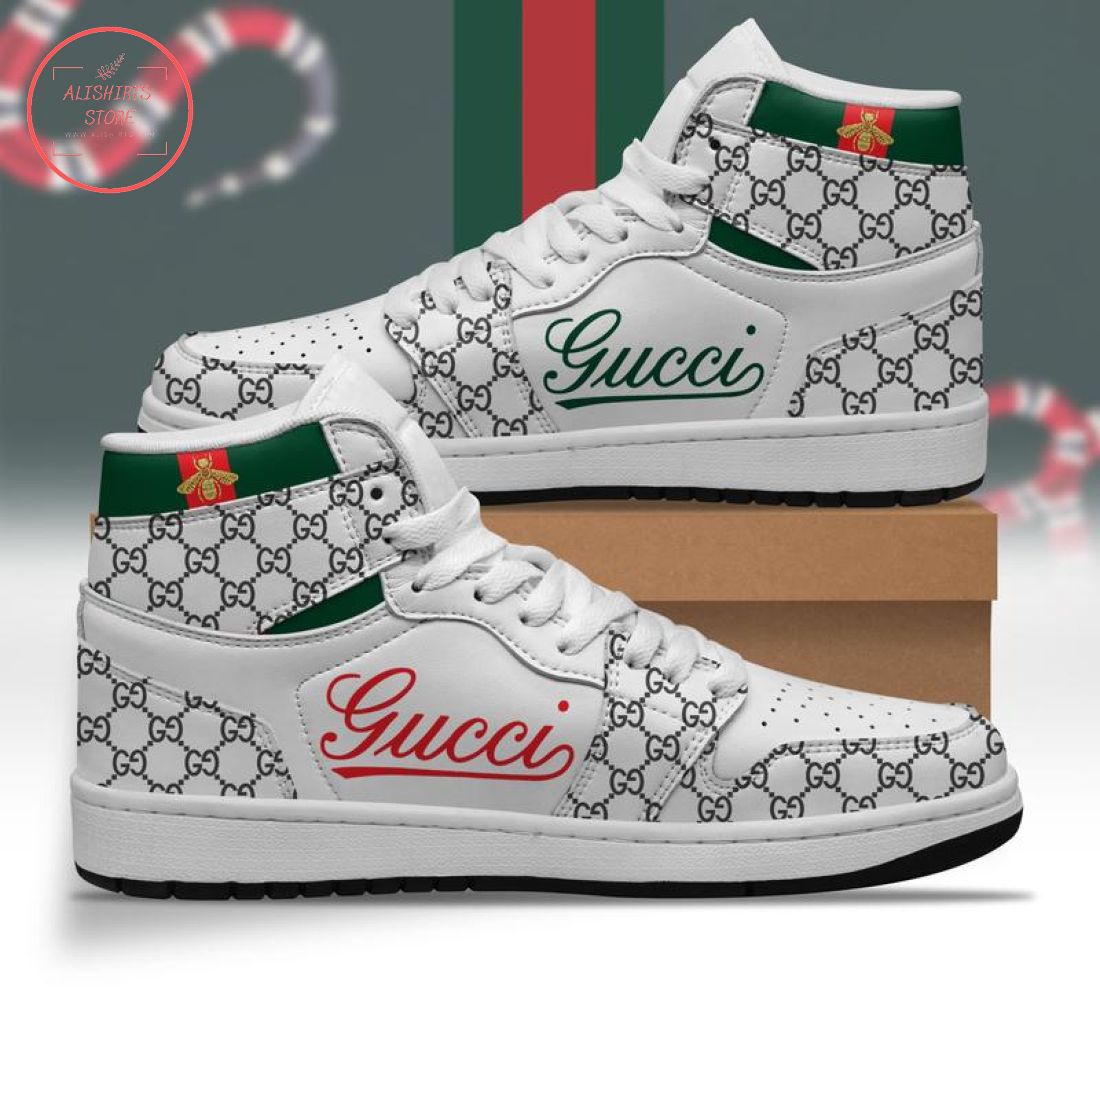 Gucci Fly High Air Jordan 1 White Sneakers